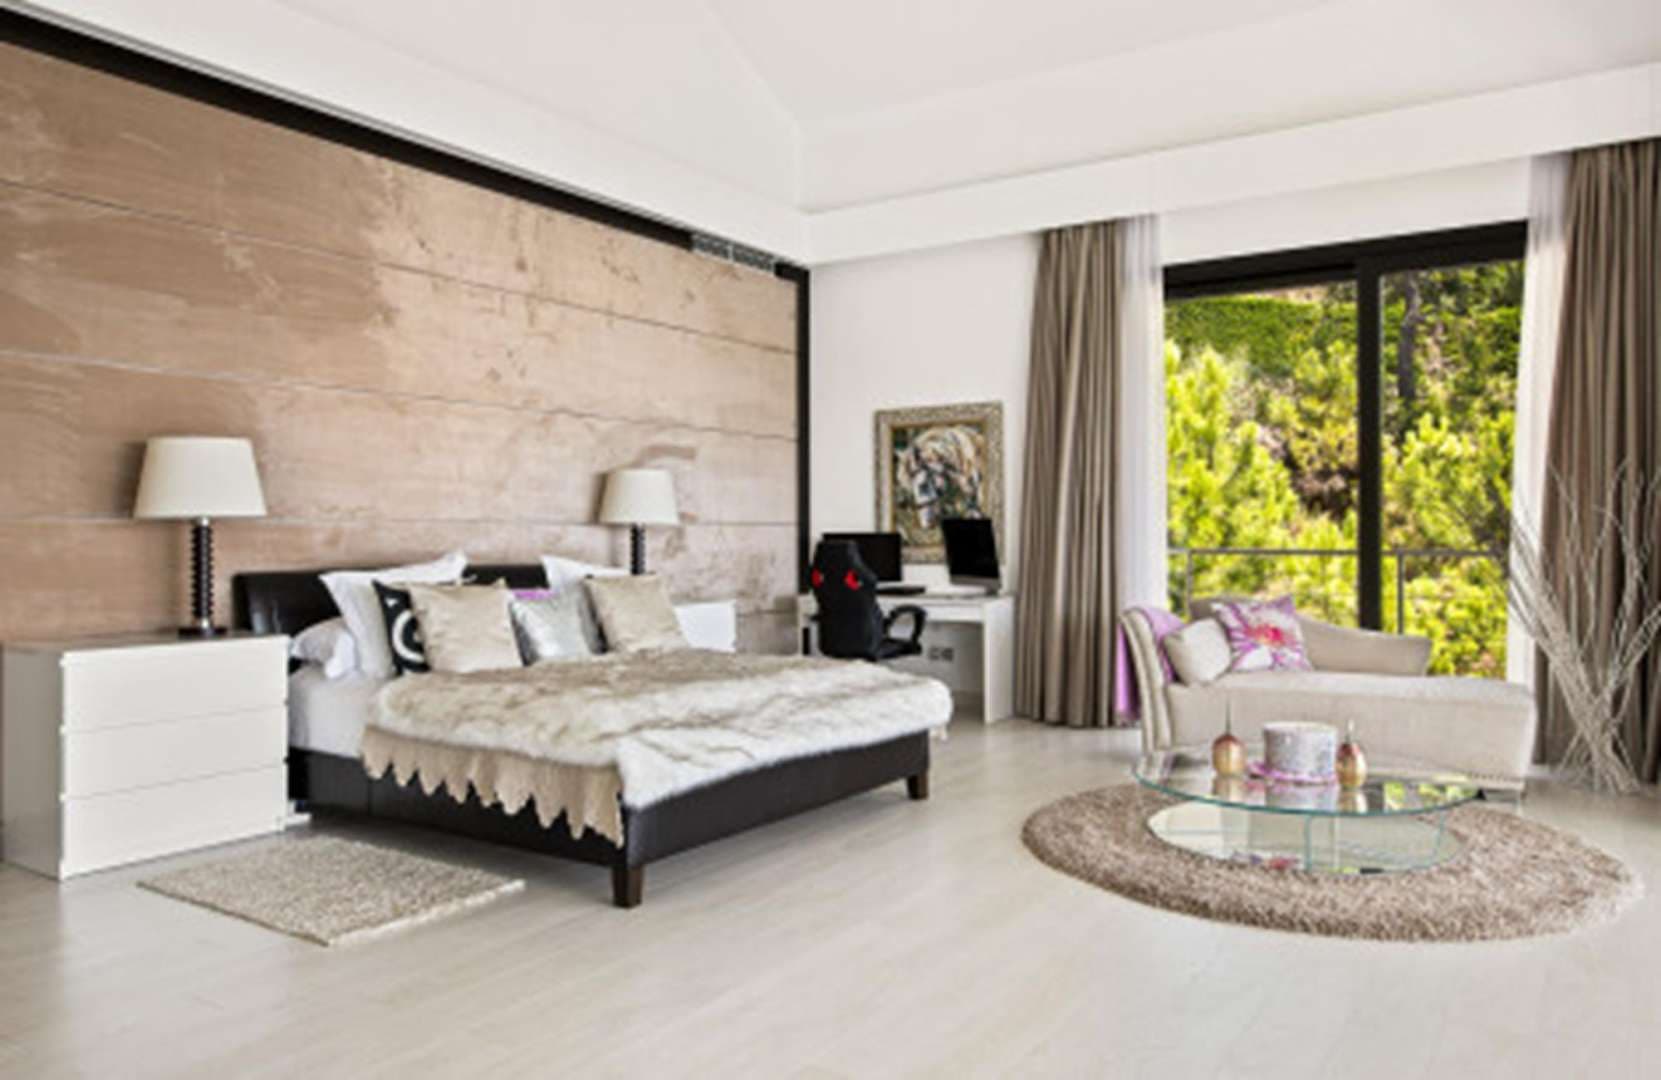 8 Bedroom Villa For Sale La Zagaleta Lp05830 Ec66f465b588800.jpg